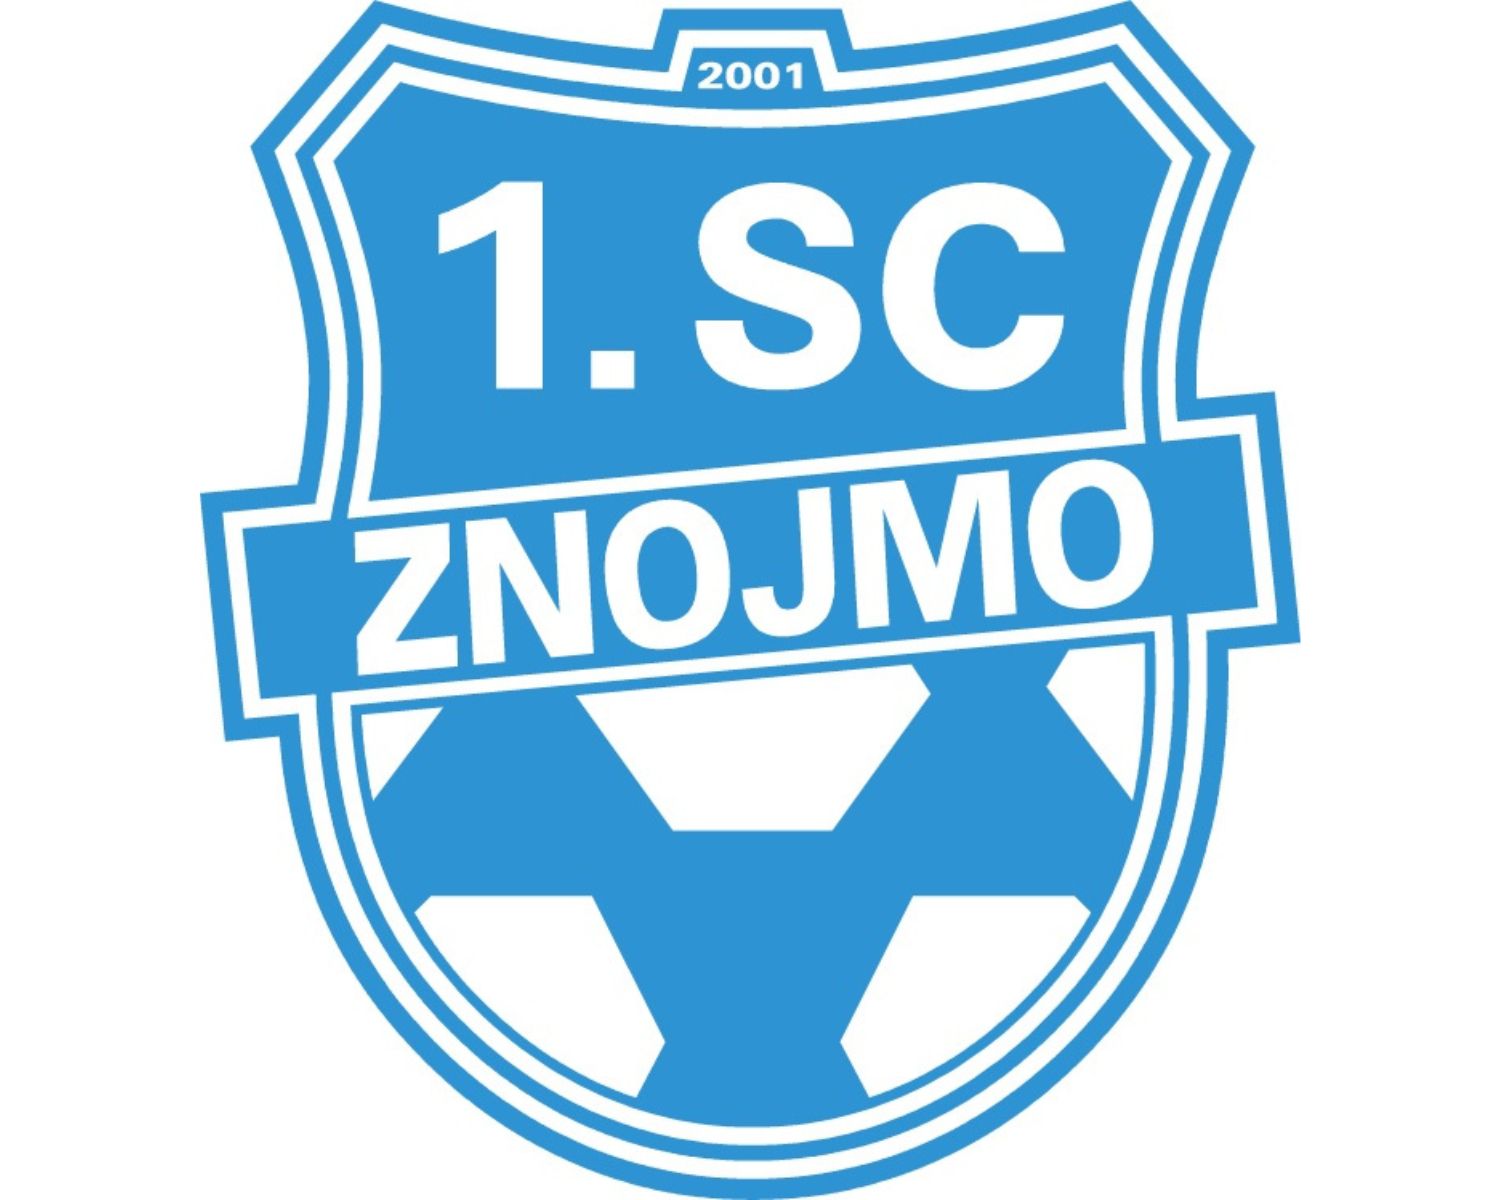 sc-znojmo-22-football-club-facts